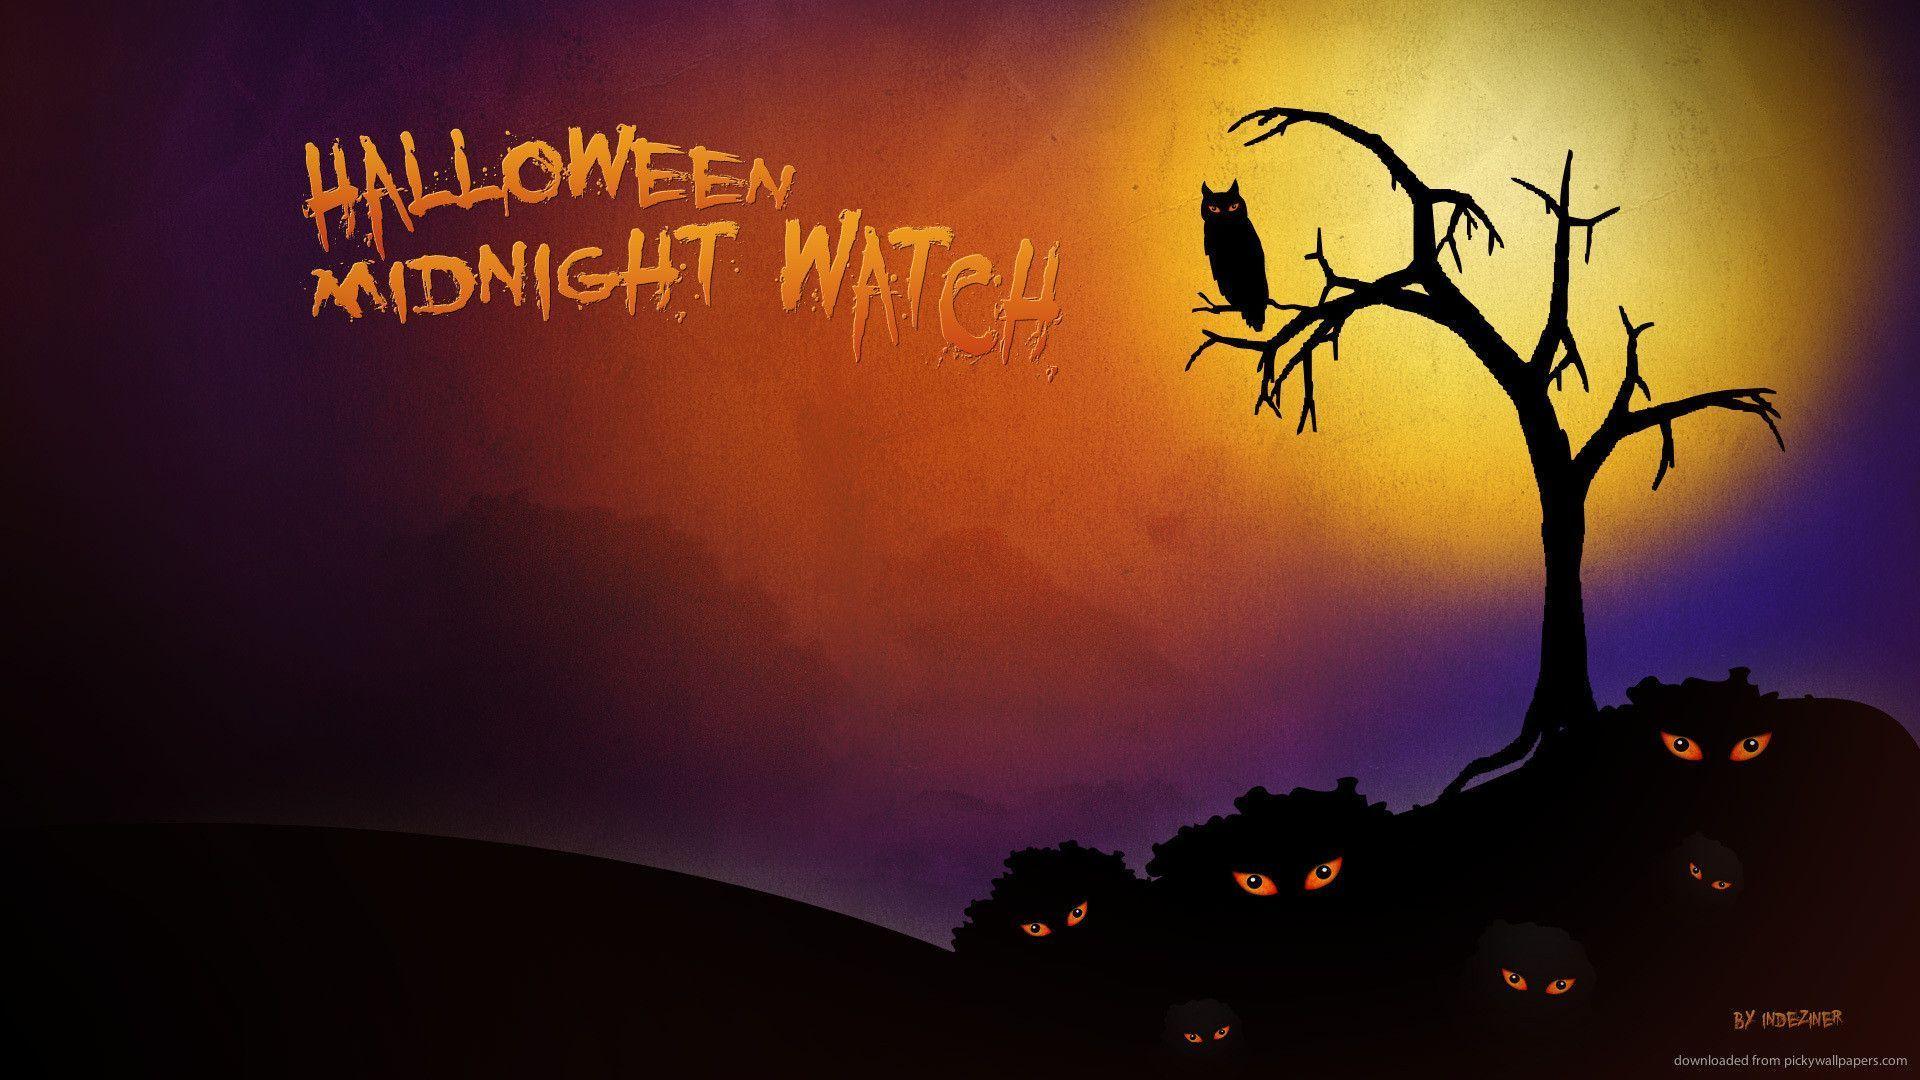 Download 1920x1080 Halloween Midnight Watch Wallpaper